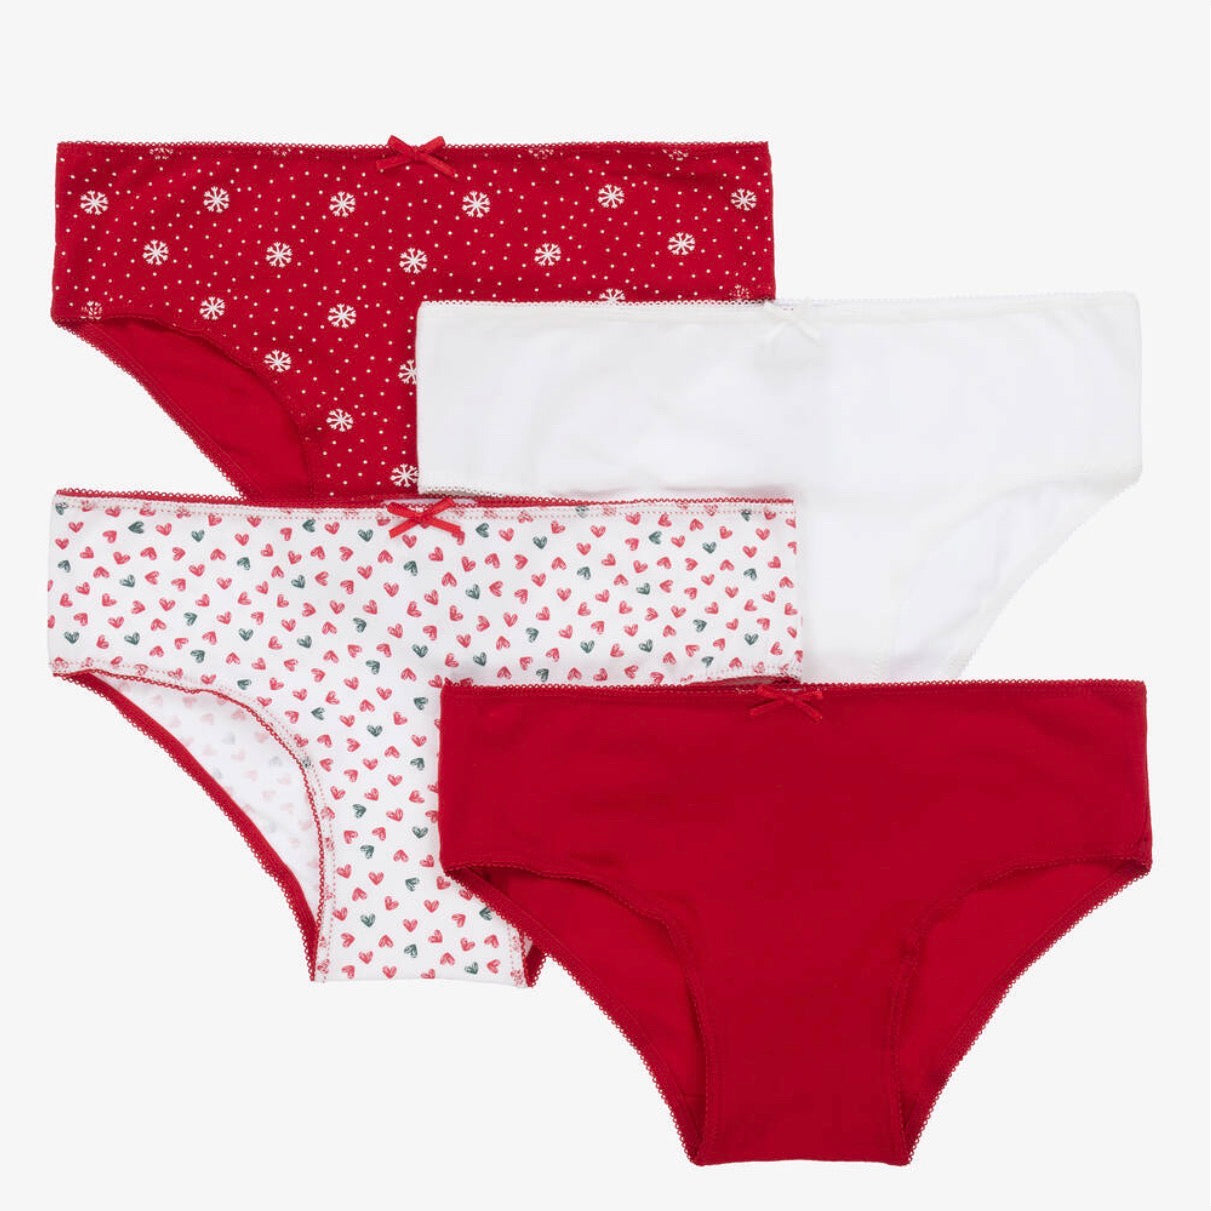 Mayoral Girls 4 Pack Underwear Set 10560 Red Clothing 6YRS / Red,8YRS / Red,10YRS / Red,12YRS / Red